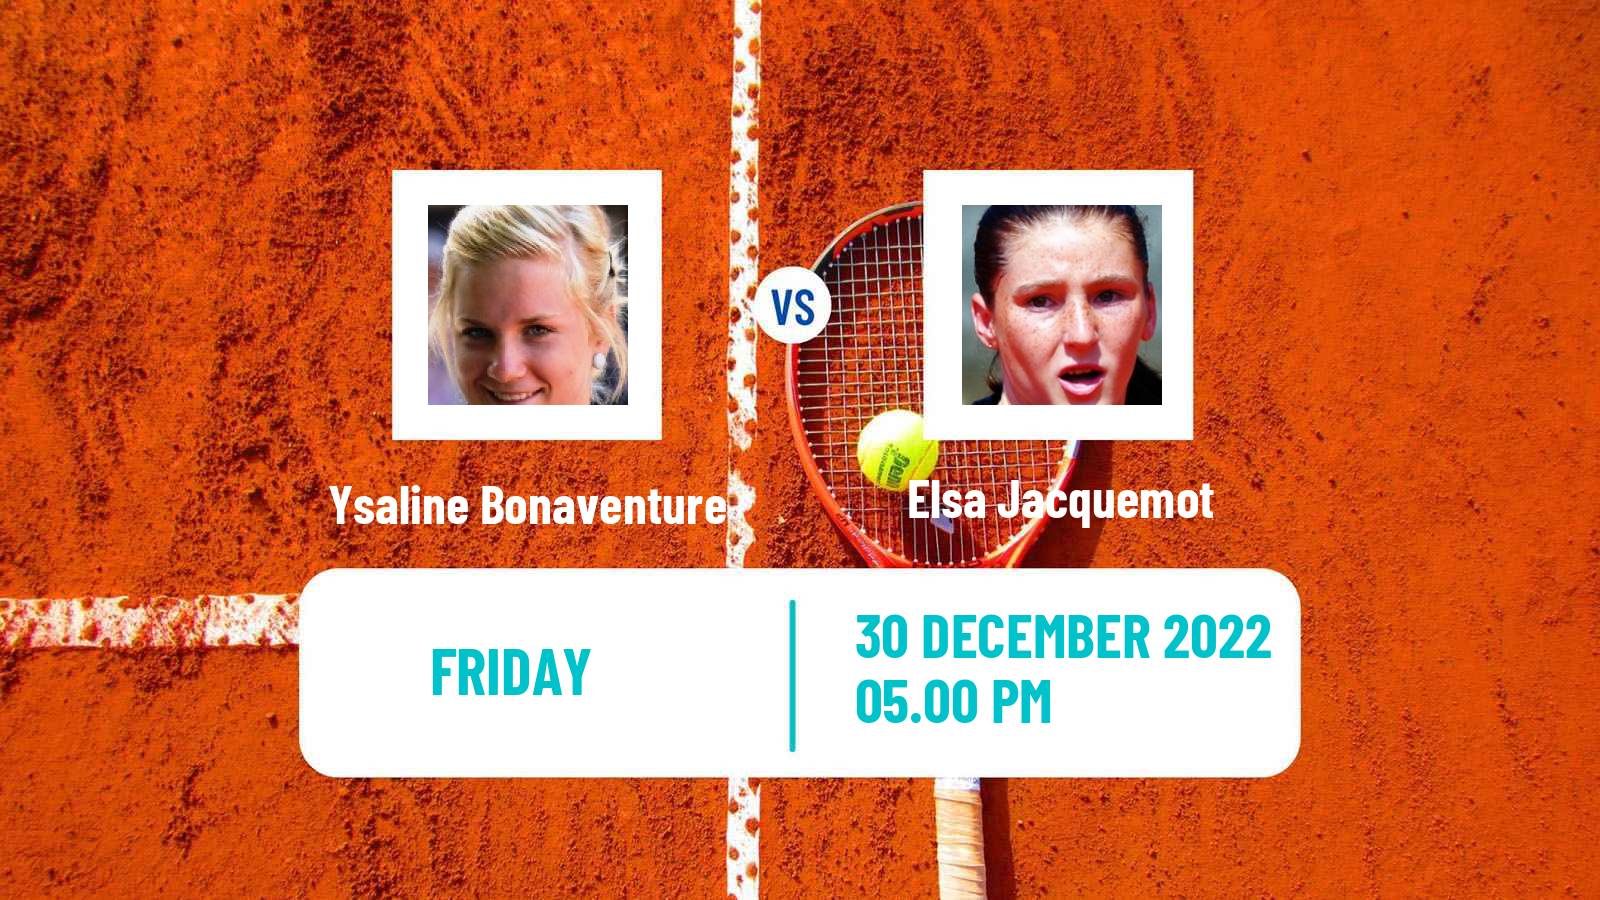 Tennis WTA Auckland Ysaline Bonaventure - Elsa Jacquemot